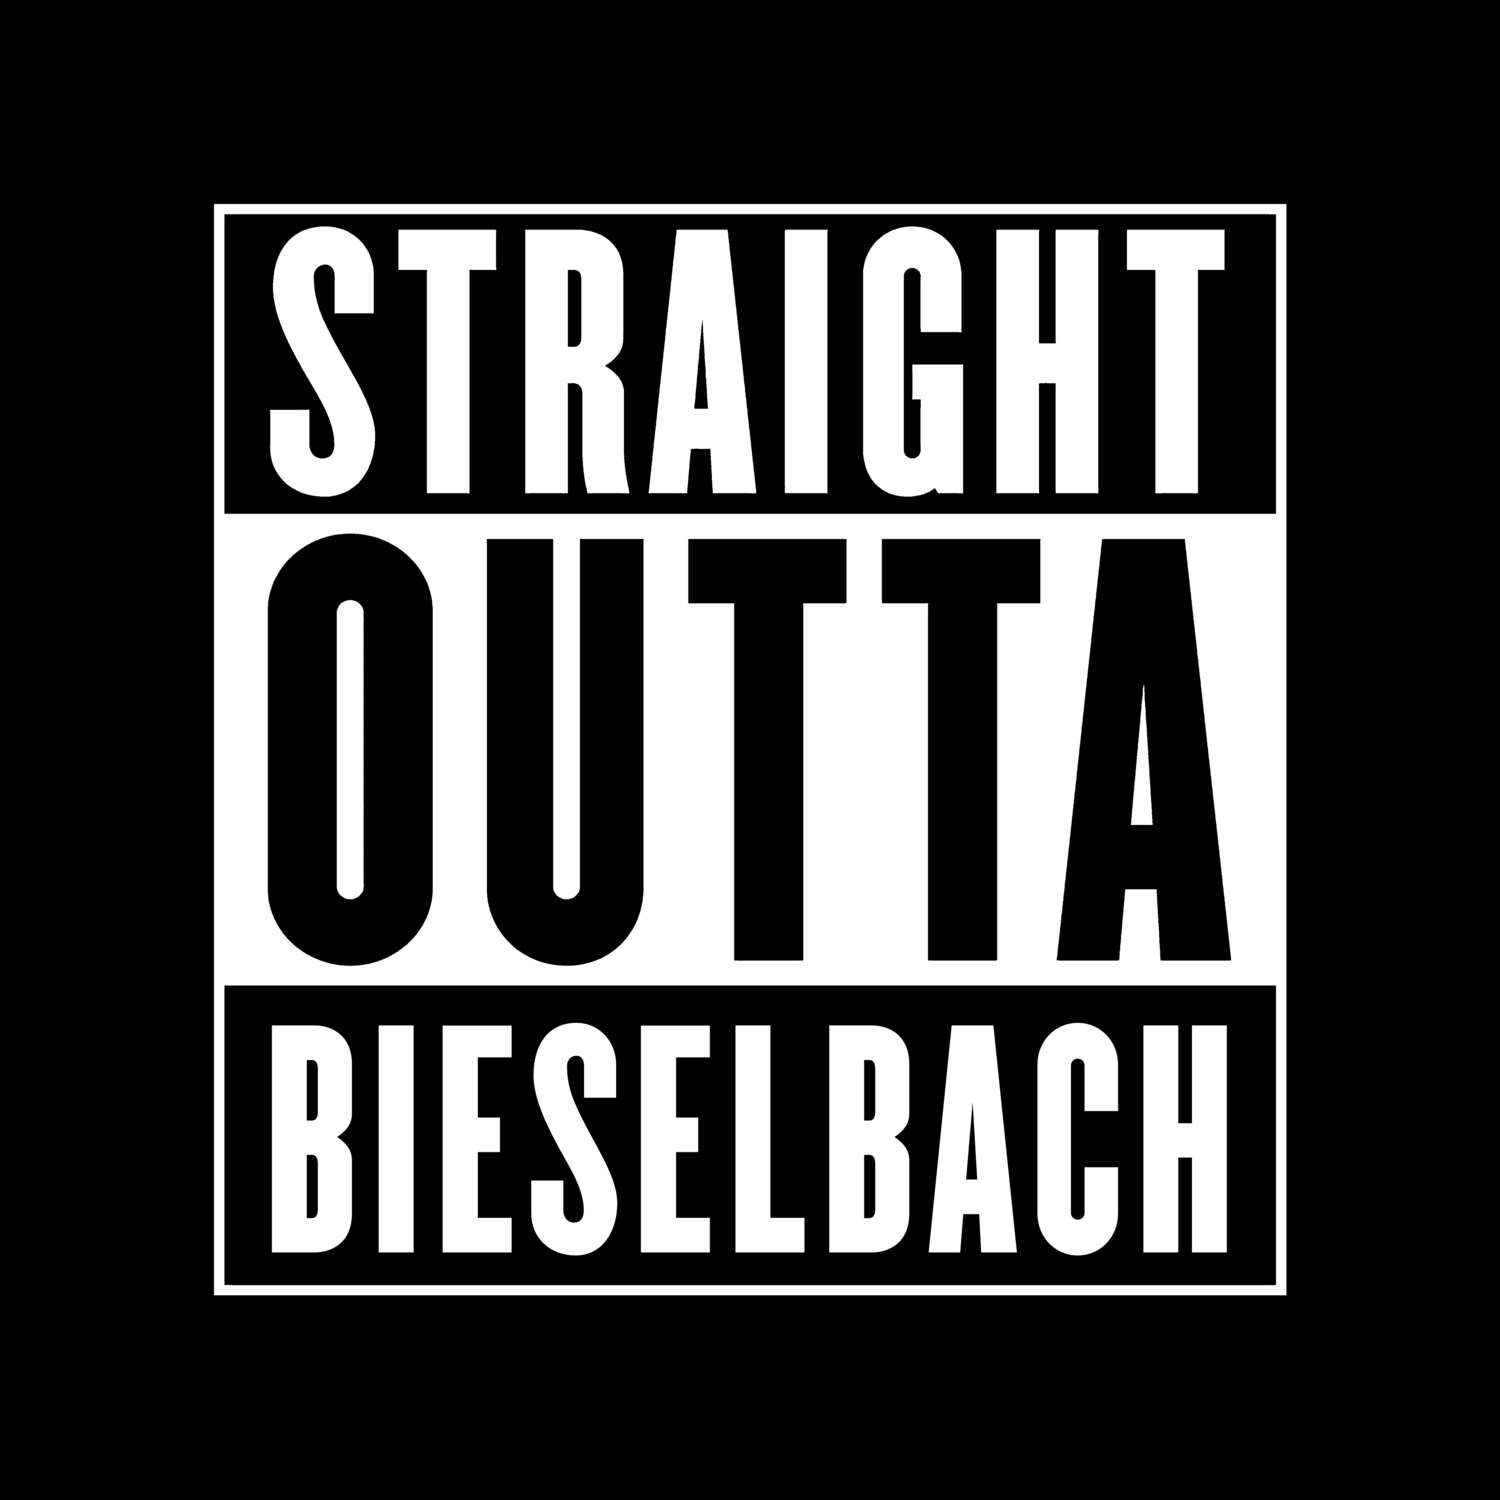 Bieselbach T-Shirt »Straight Outta«